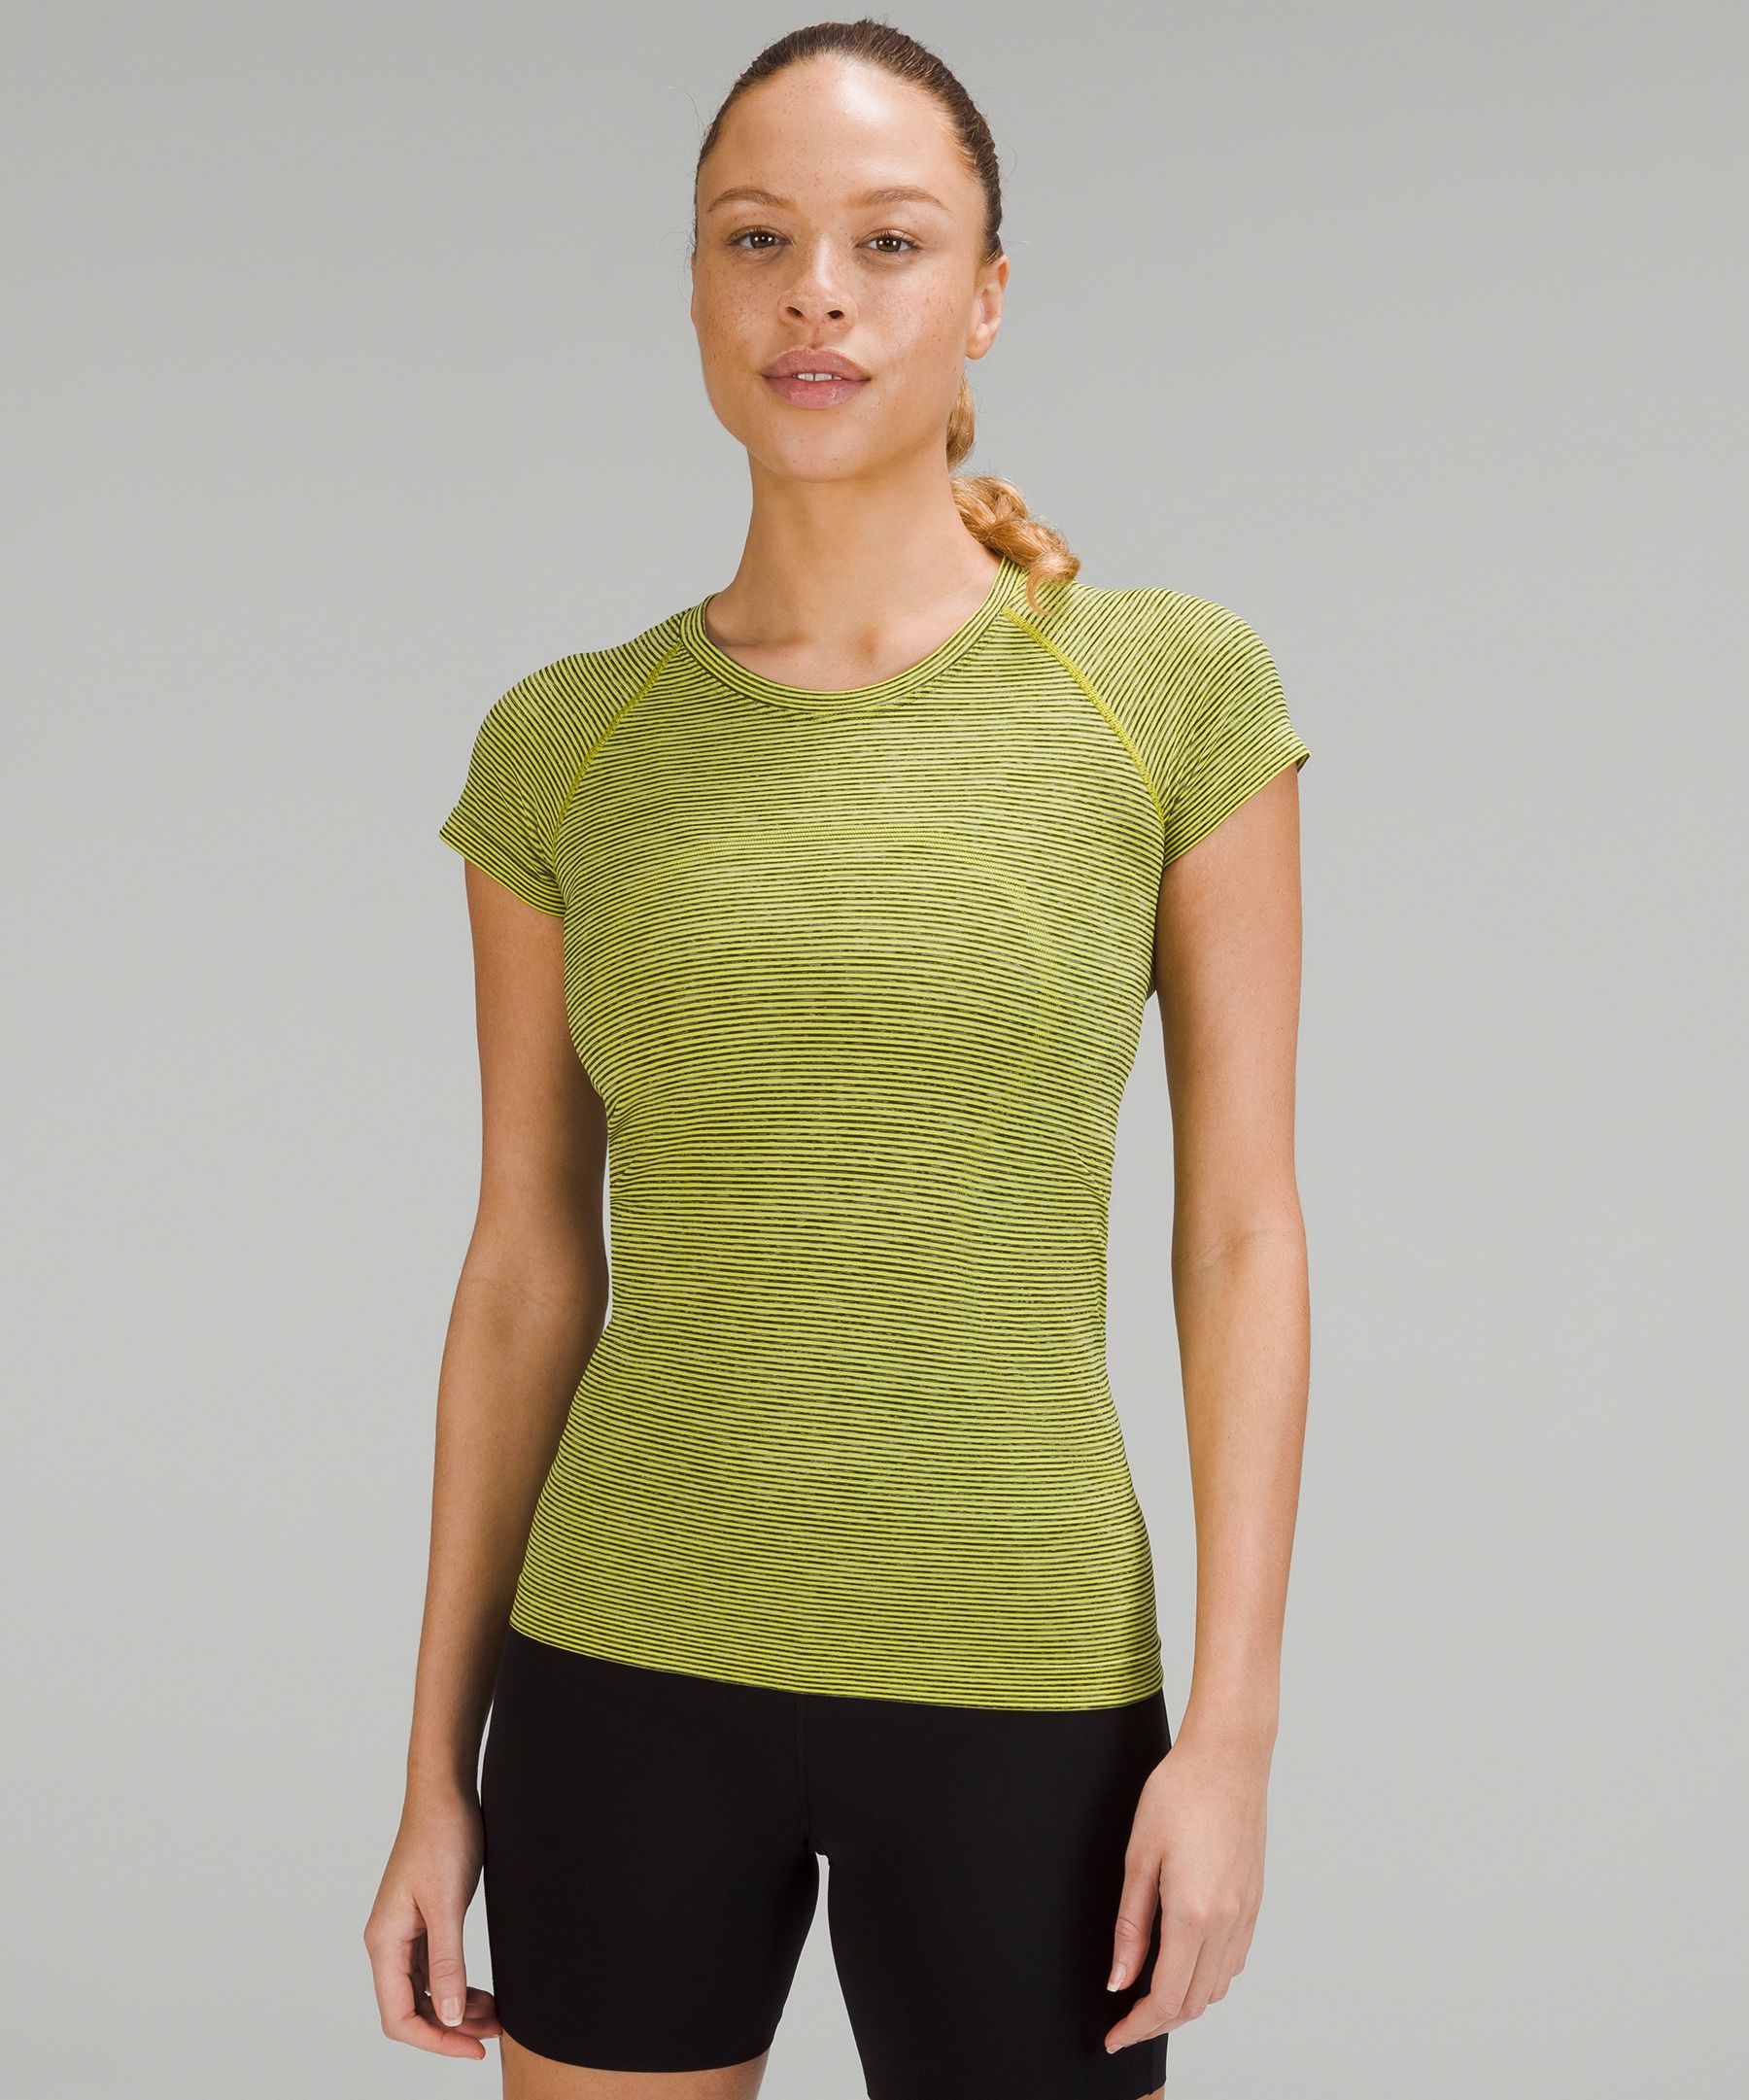 Swiftly Tech Short Sleeve Shirt 2.0 | Women's Short Sleeve Shirts